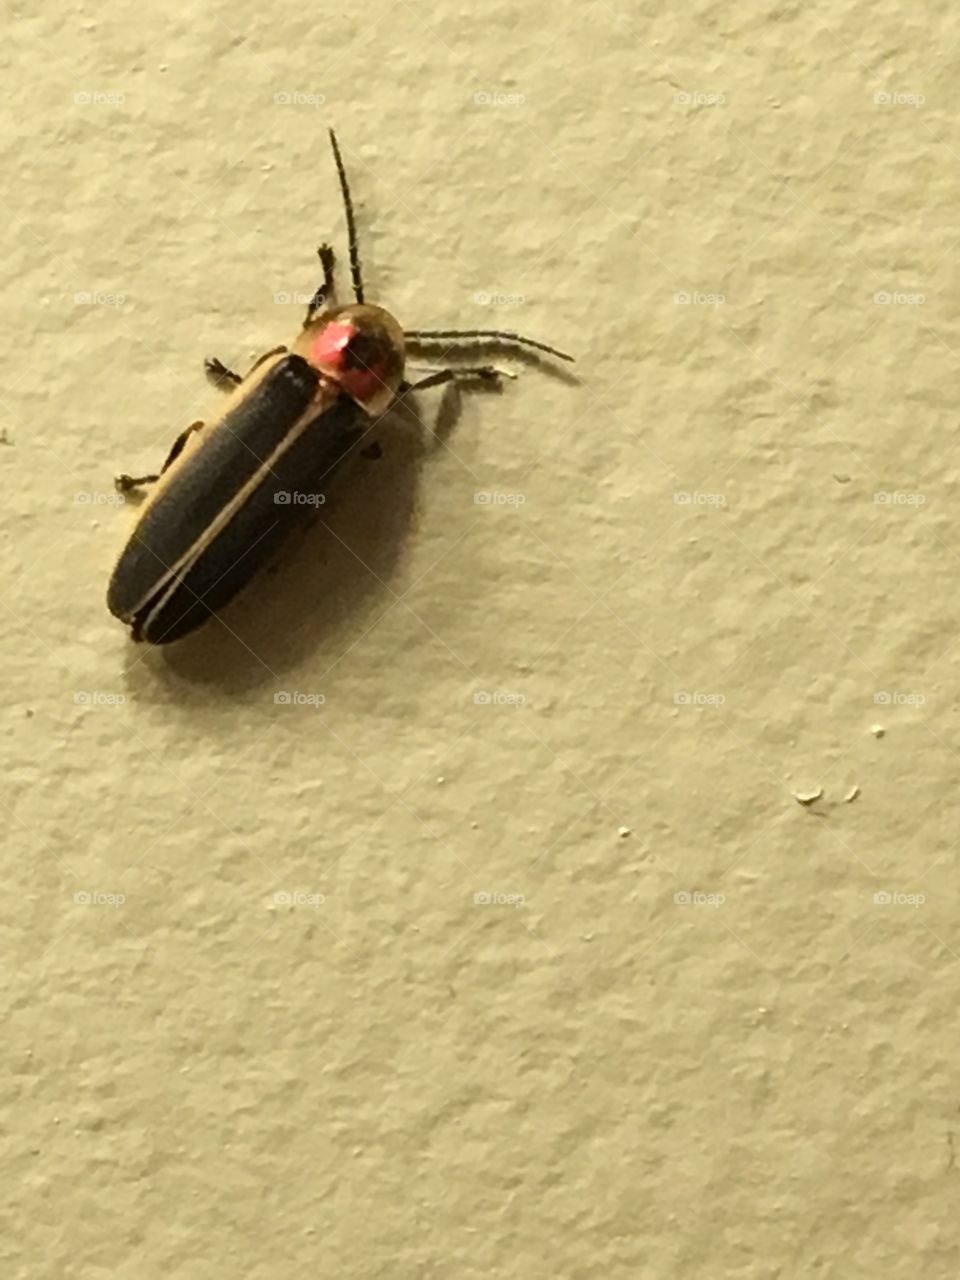 Little bug